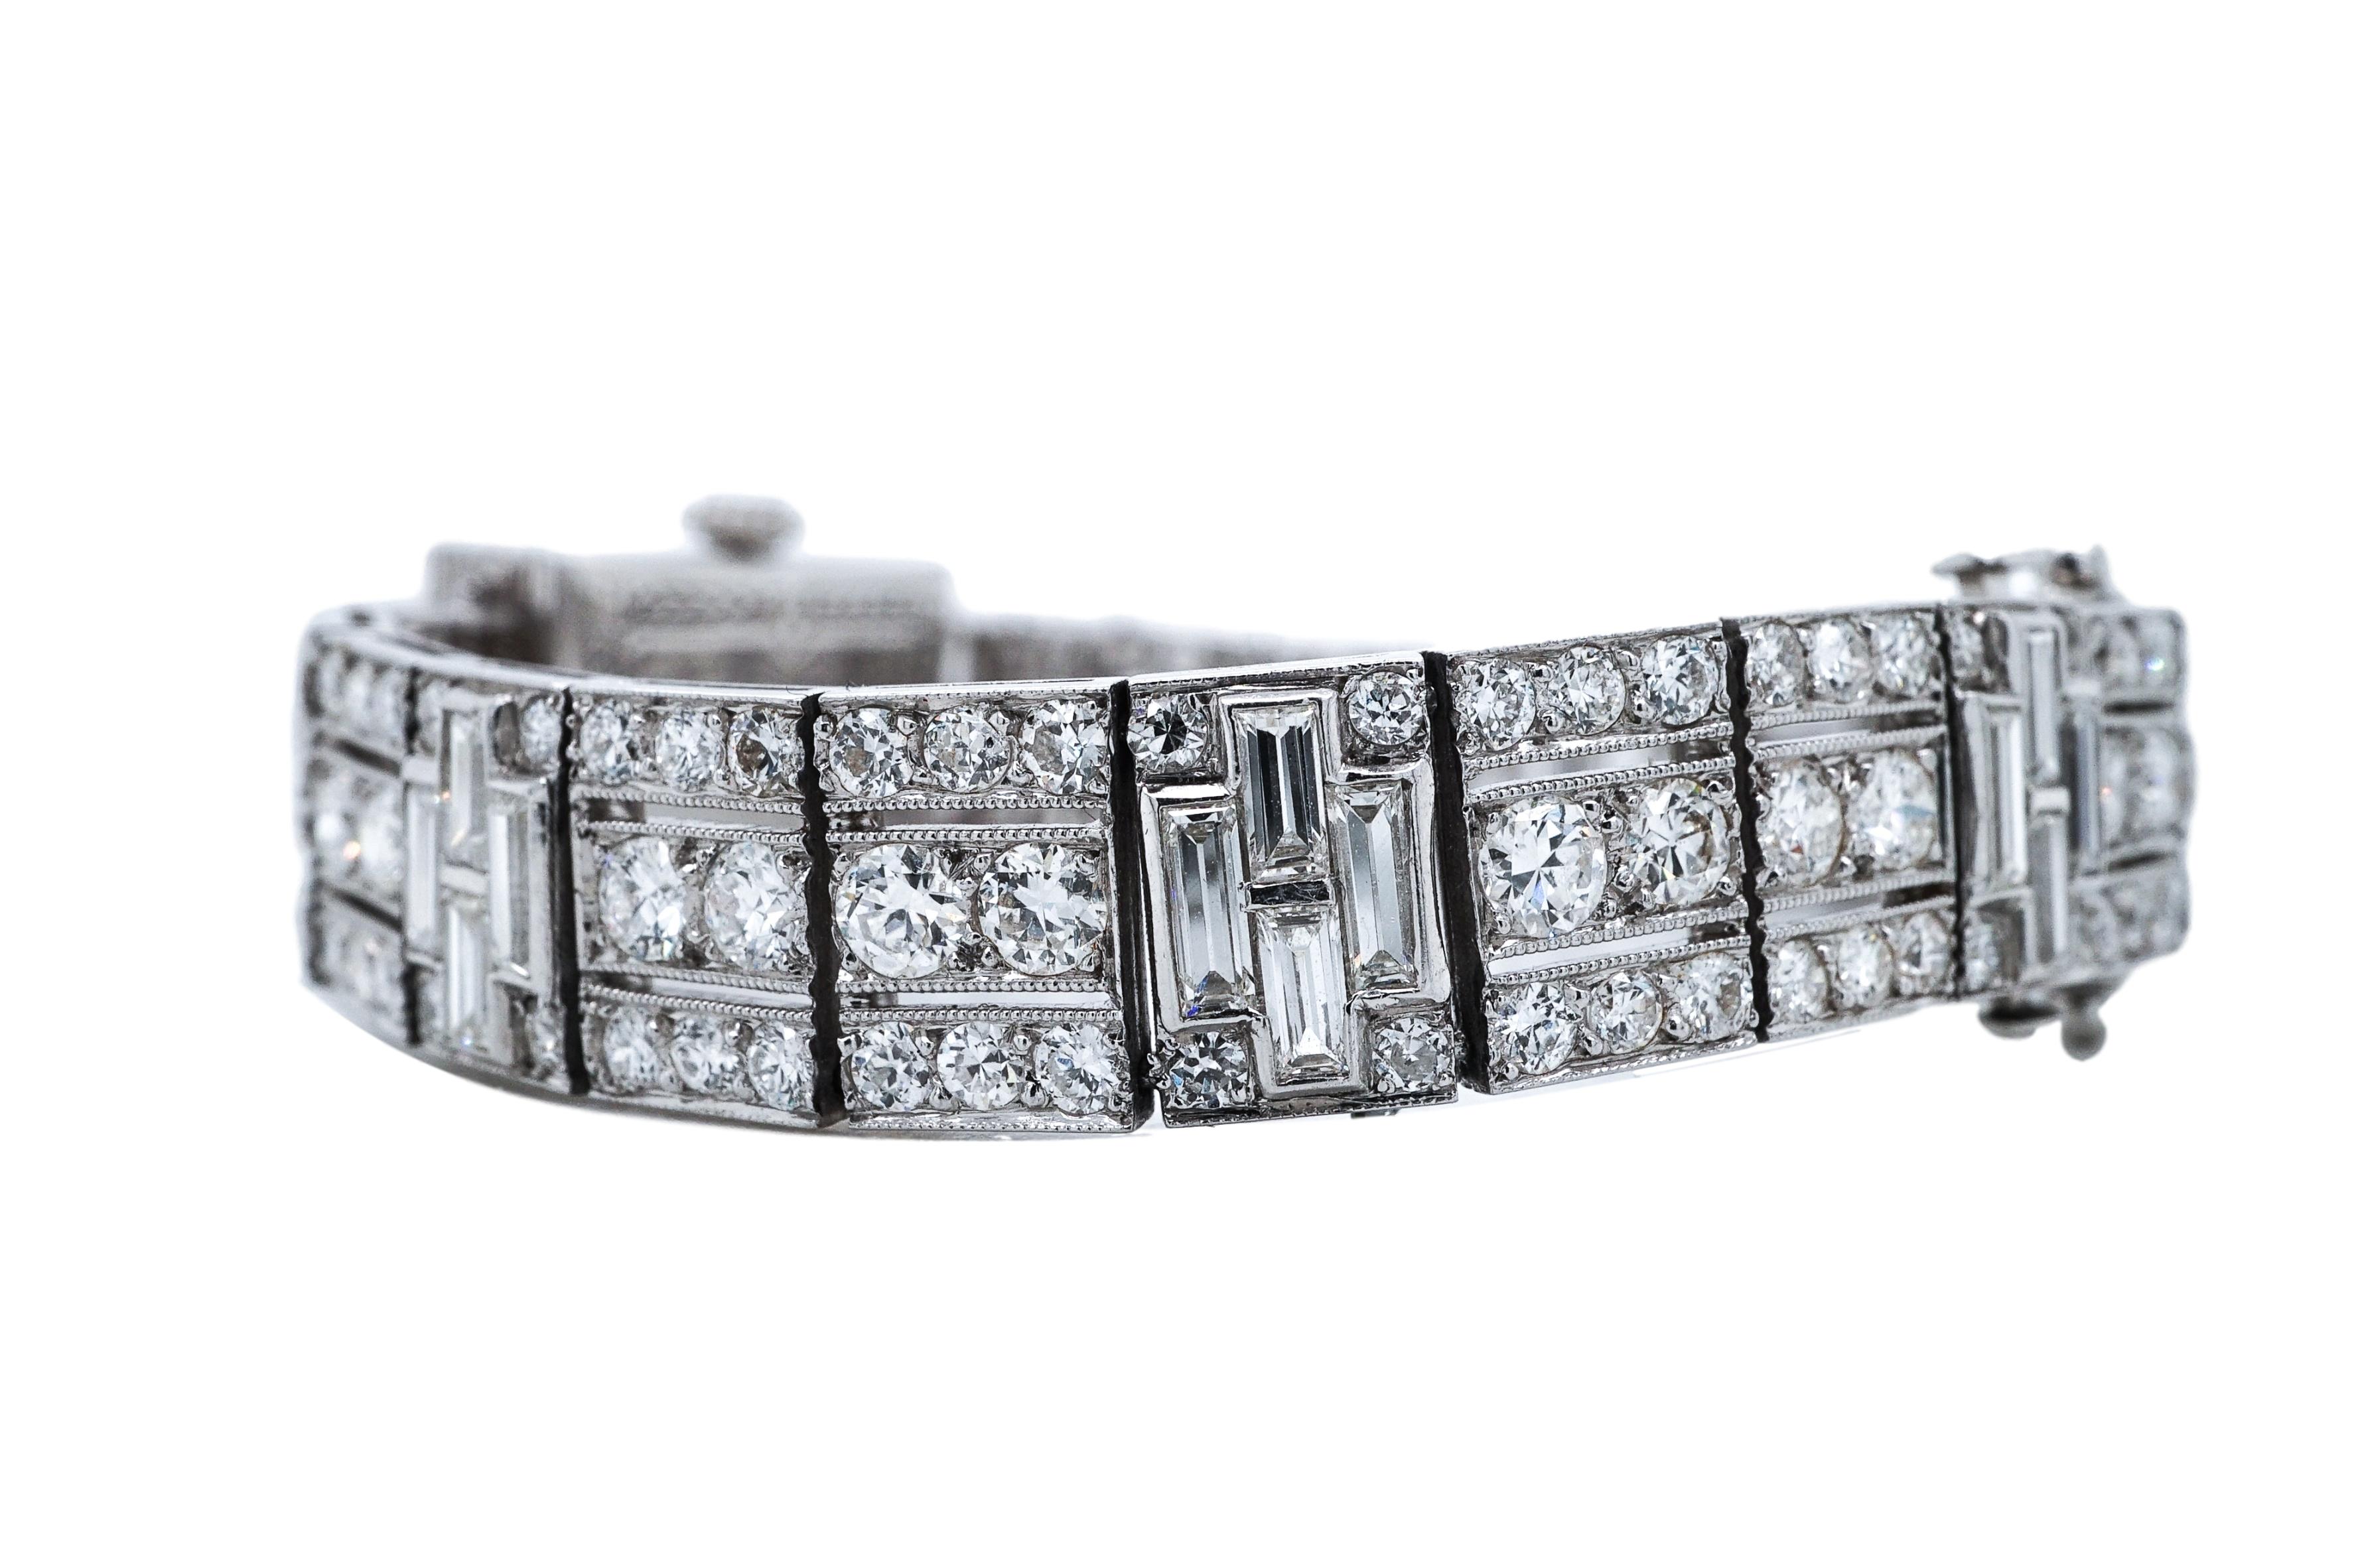 Baguette Cut Tiffany & Co. Art Deco Wristwatch